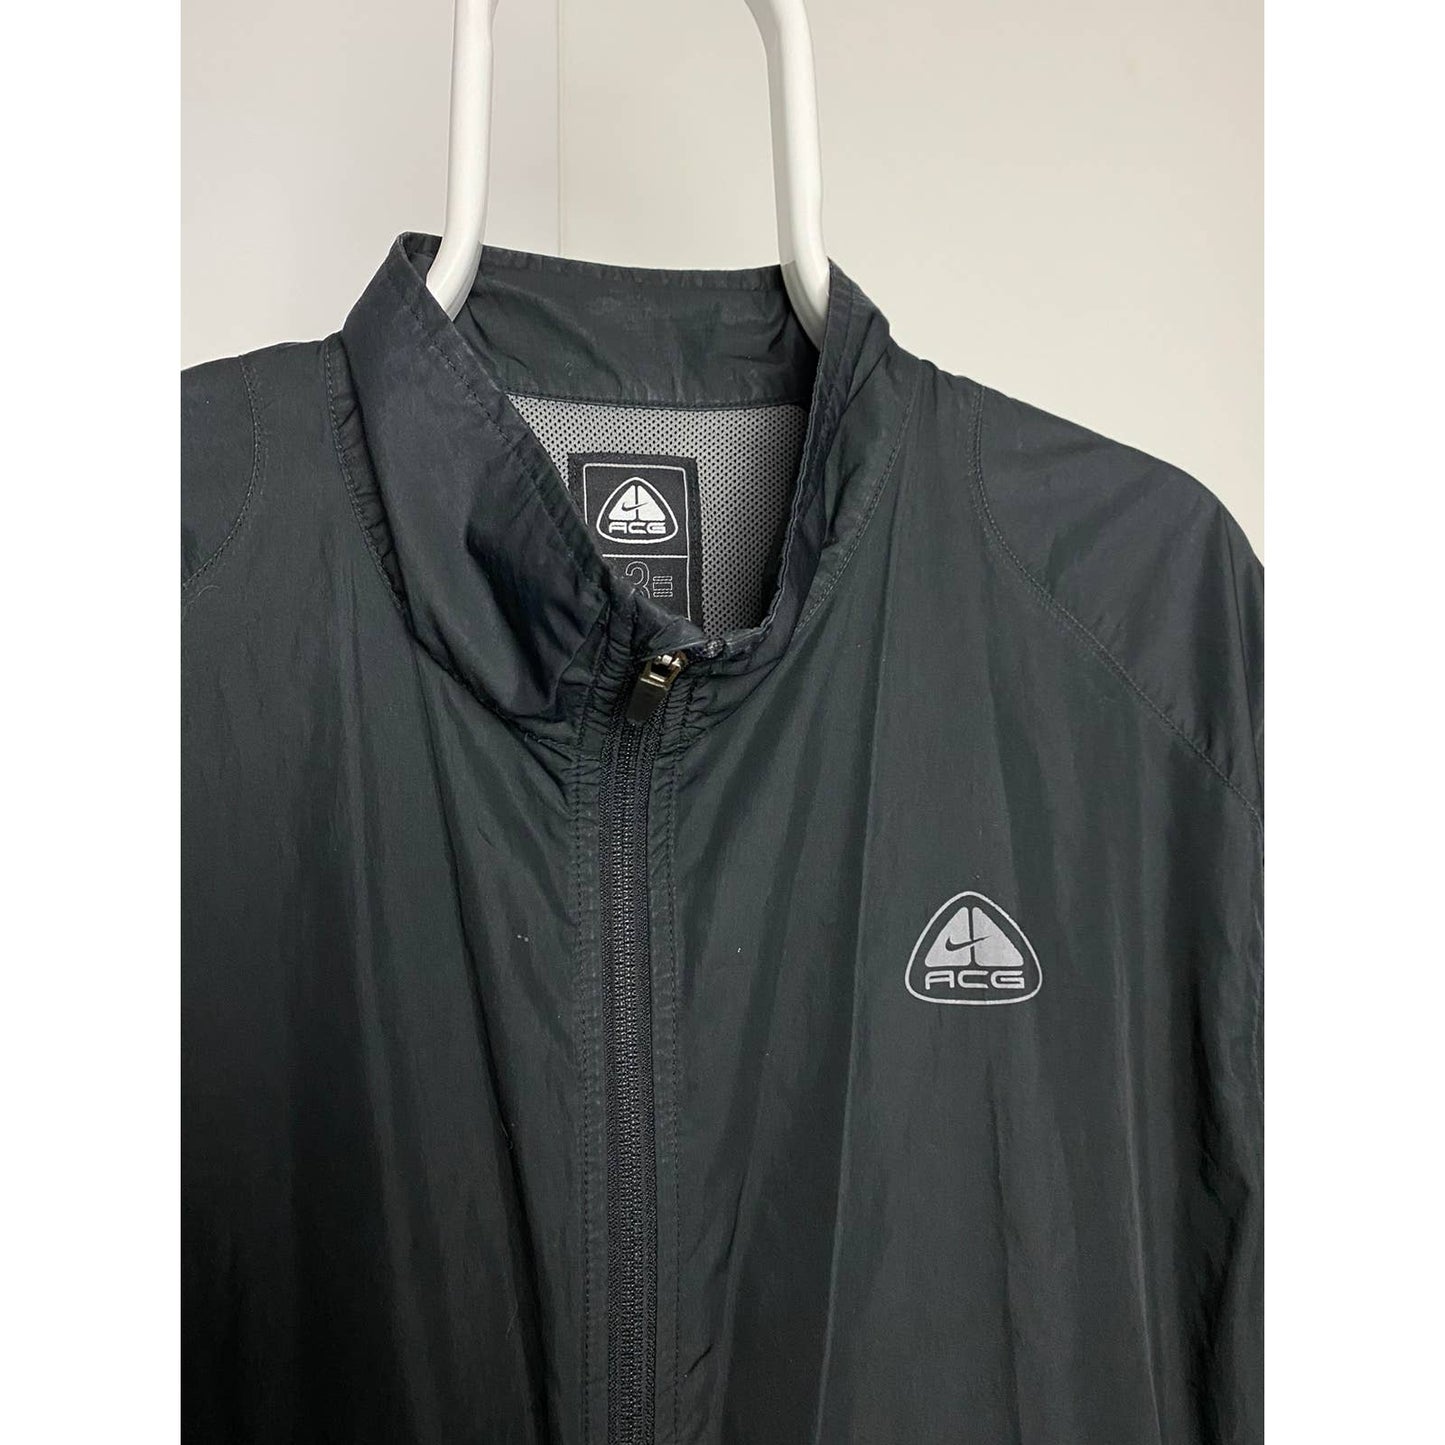 Nike ACG jacket vintage black 2000s vest 2 in 1 windbreaker